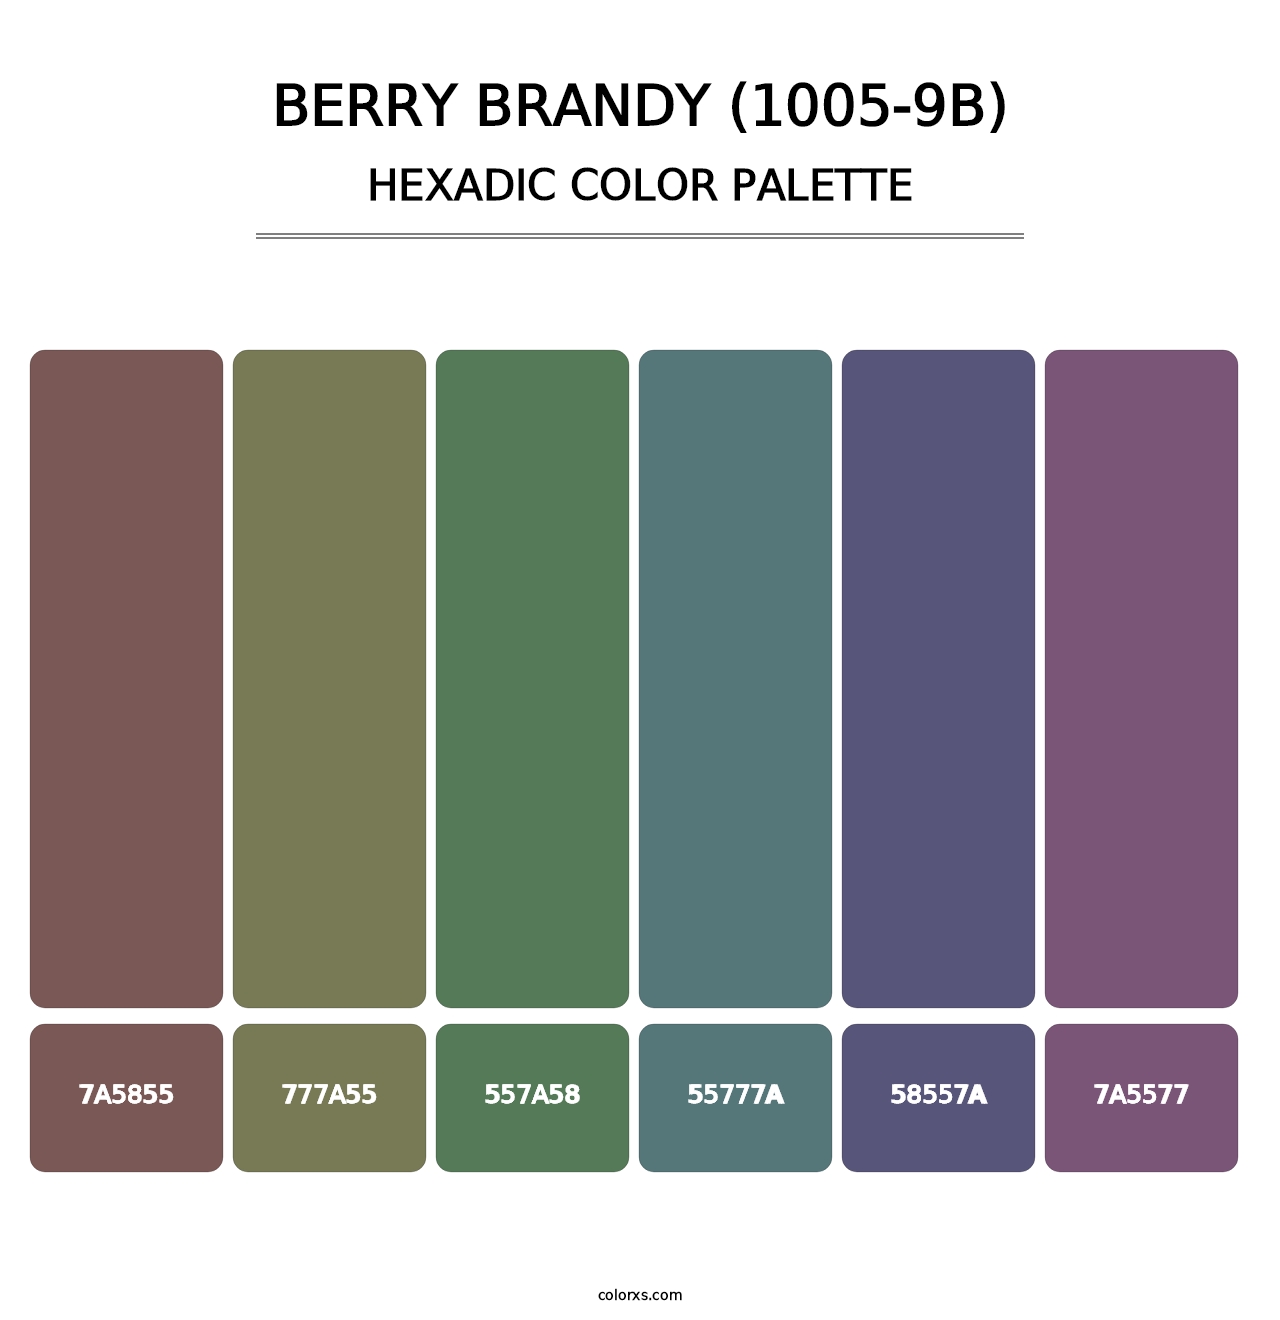 Berry Brandy (1005-9B) - Hexadic Color Palette